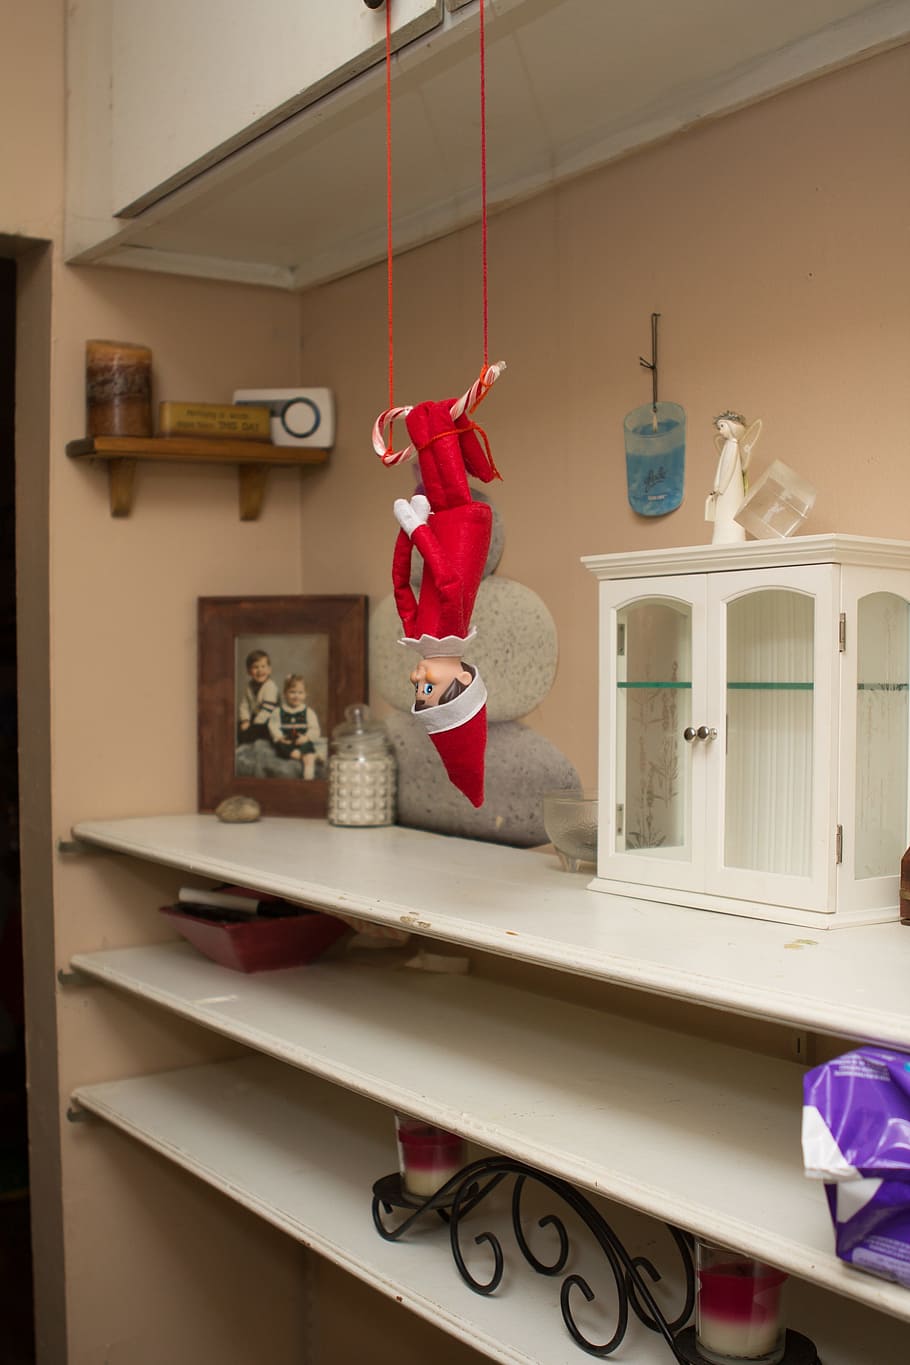 red elf doll, elf on shelf, christmas, holiday, indoors, domestic room, home interior, shelf, domestic life, representation